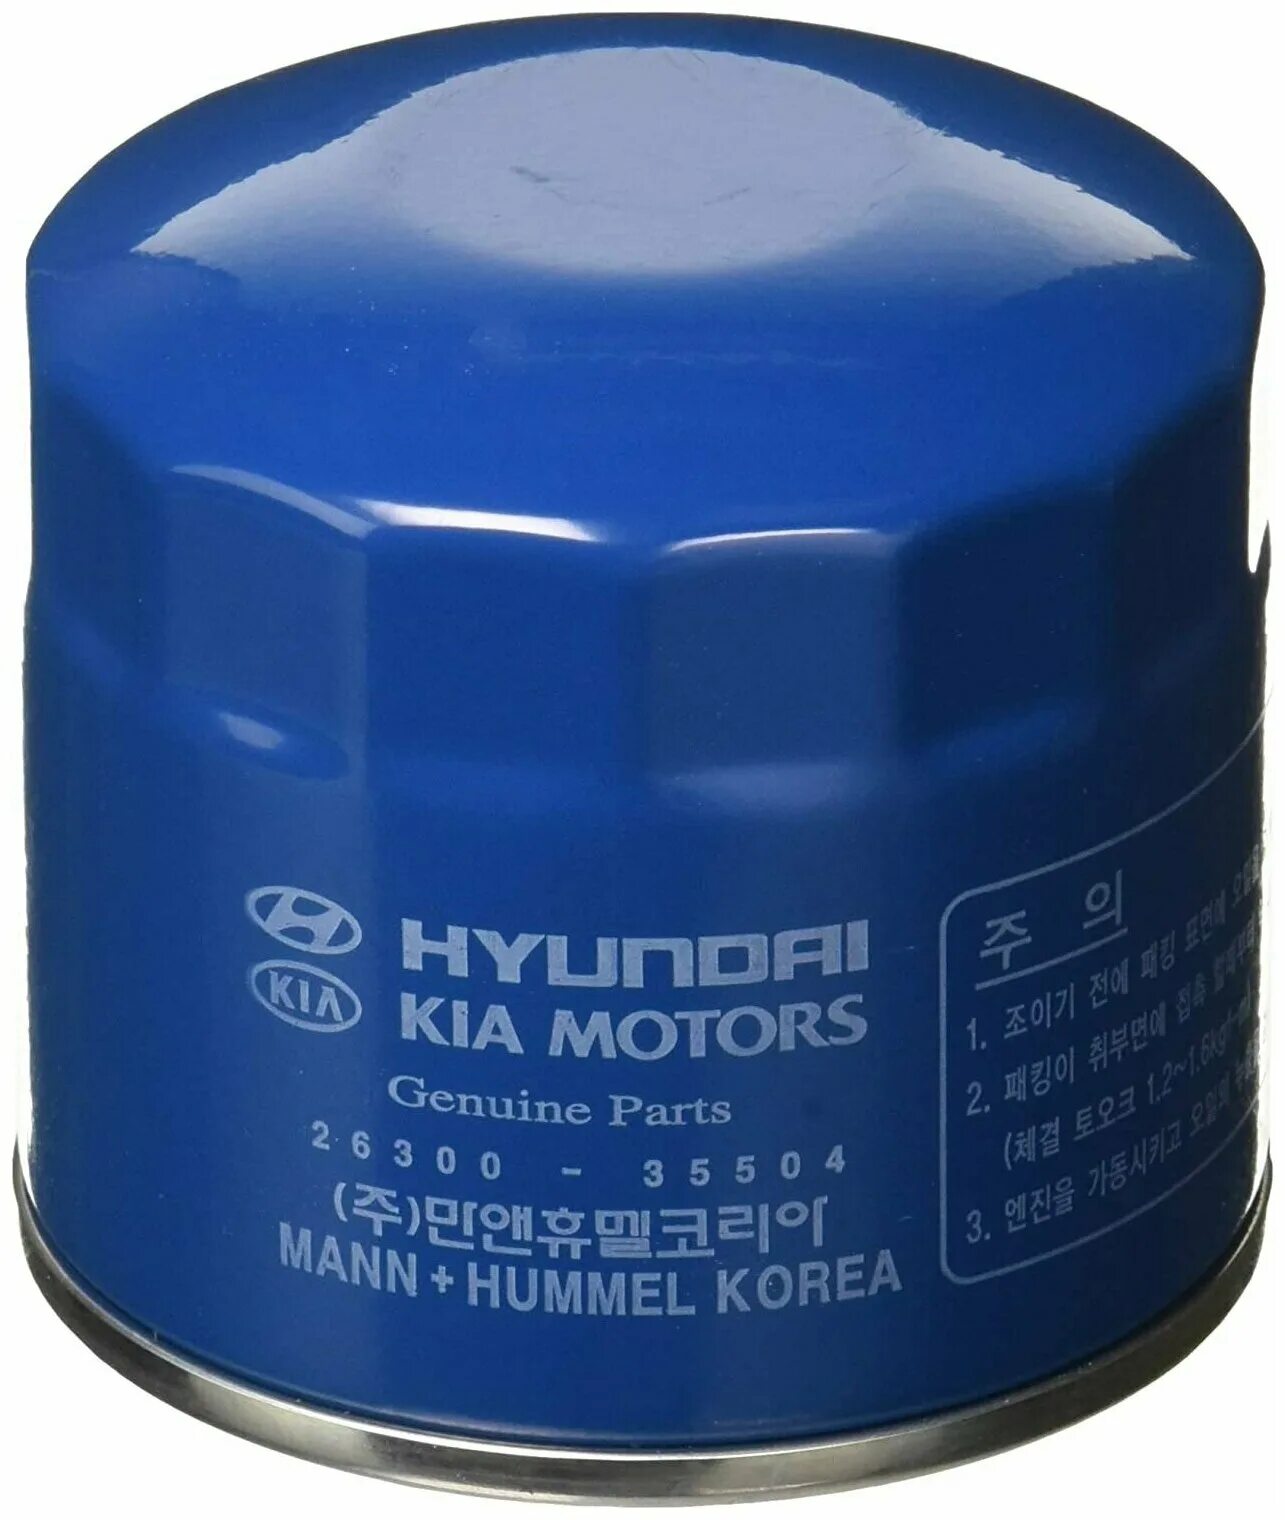 Масляный фильтр Hyundai 26300-35505. Hyundai/Kia 26300-35504 фильтр масляный. 2630035505 Фильтр масляный. Фильтр 26300-35504. Фильтр масла хендай солярис